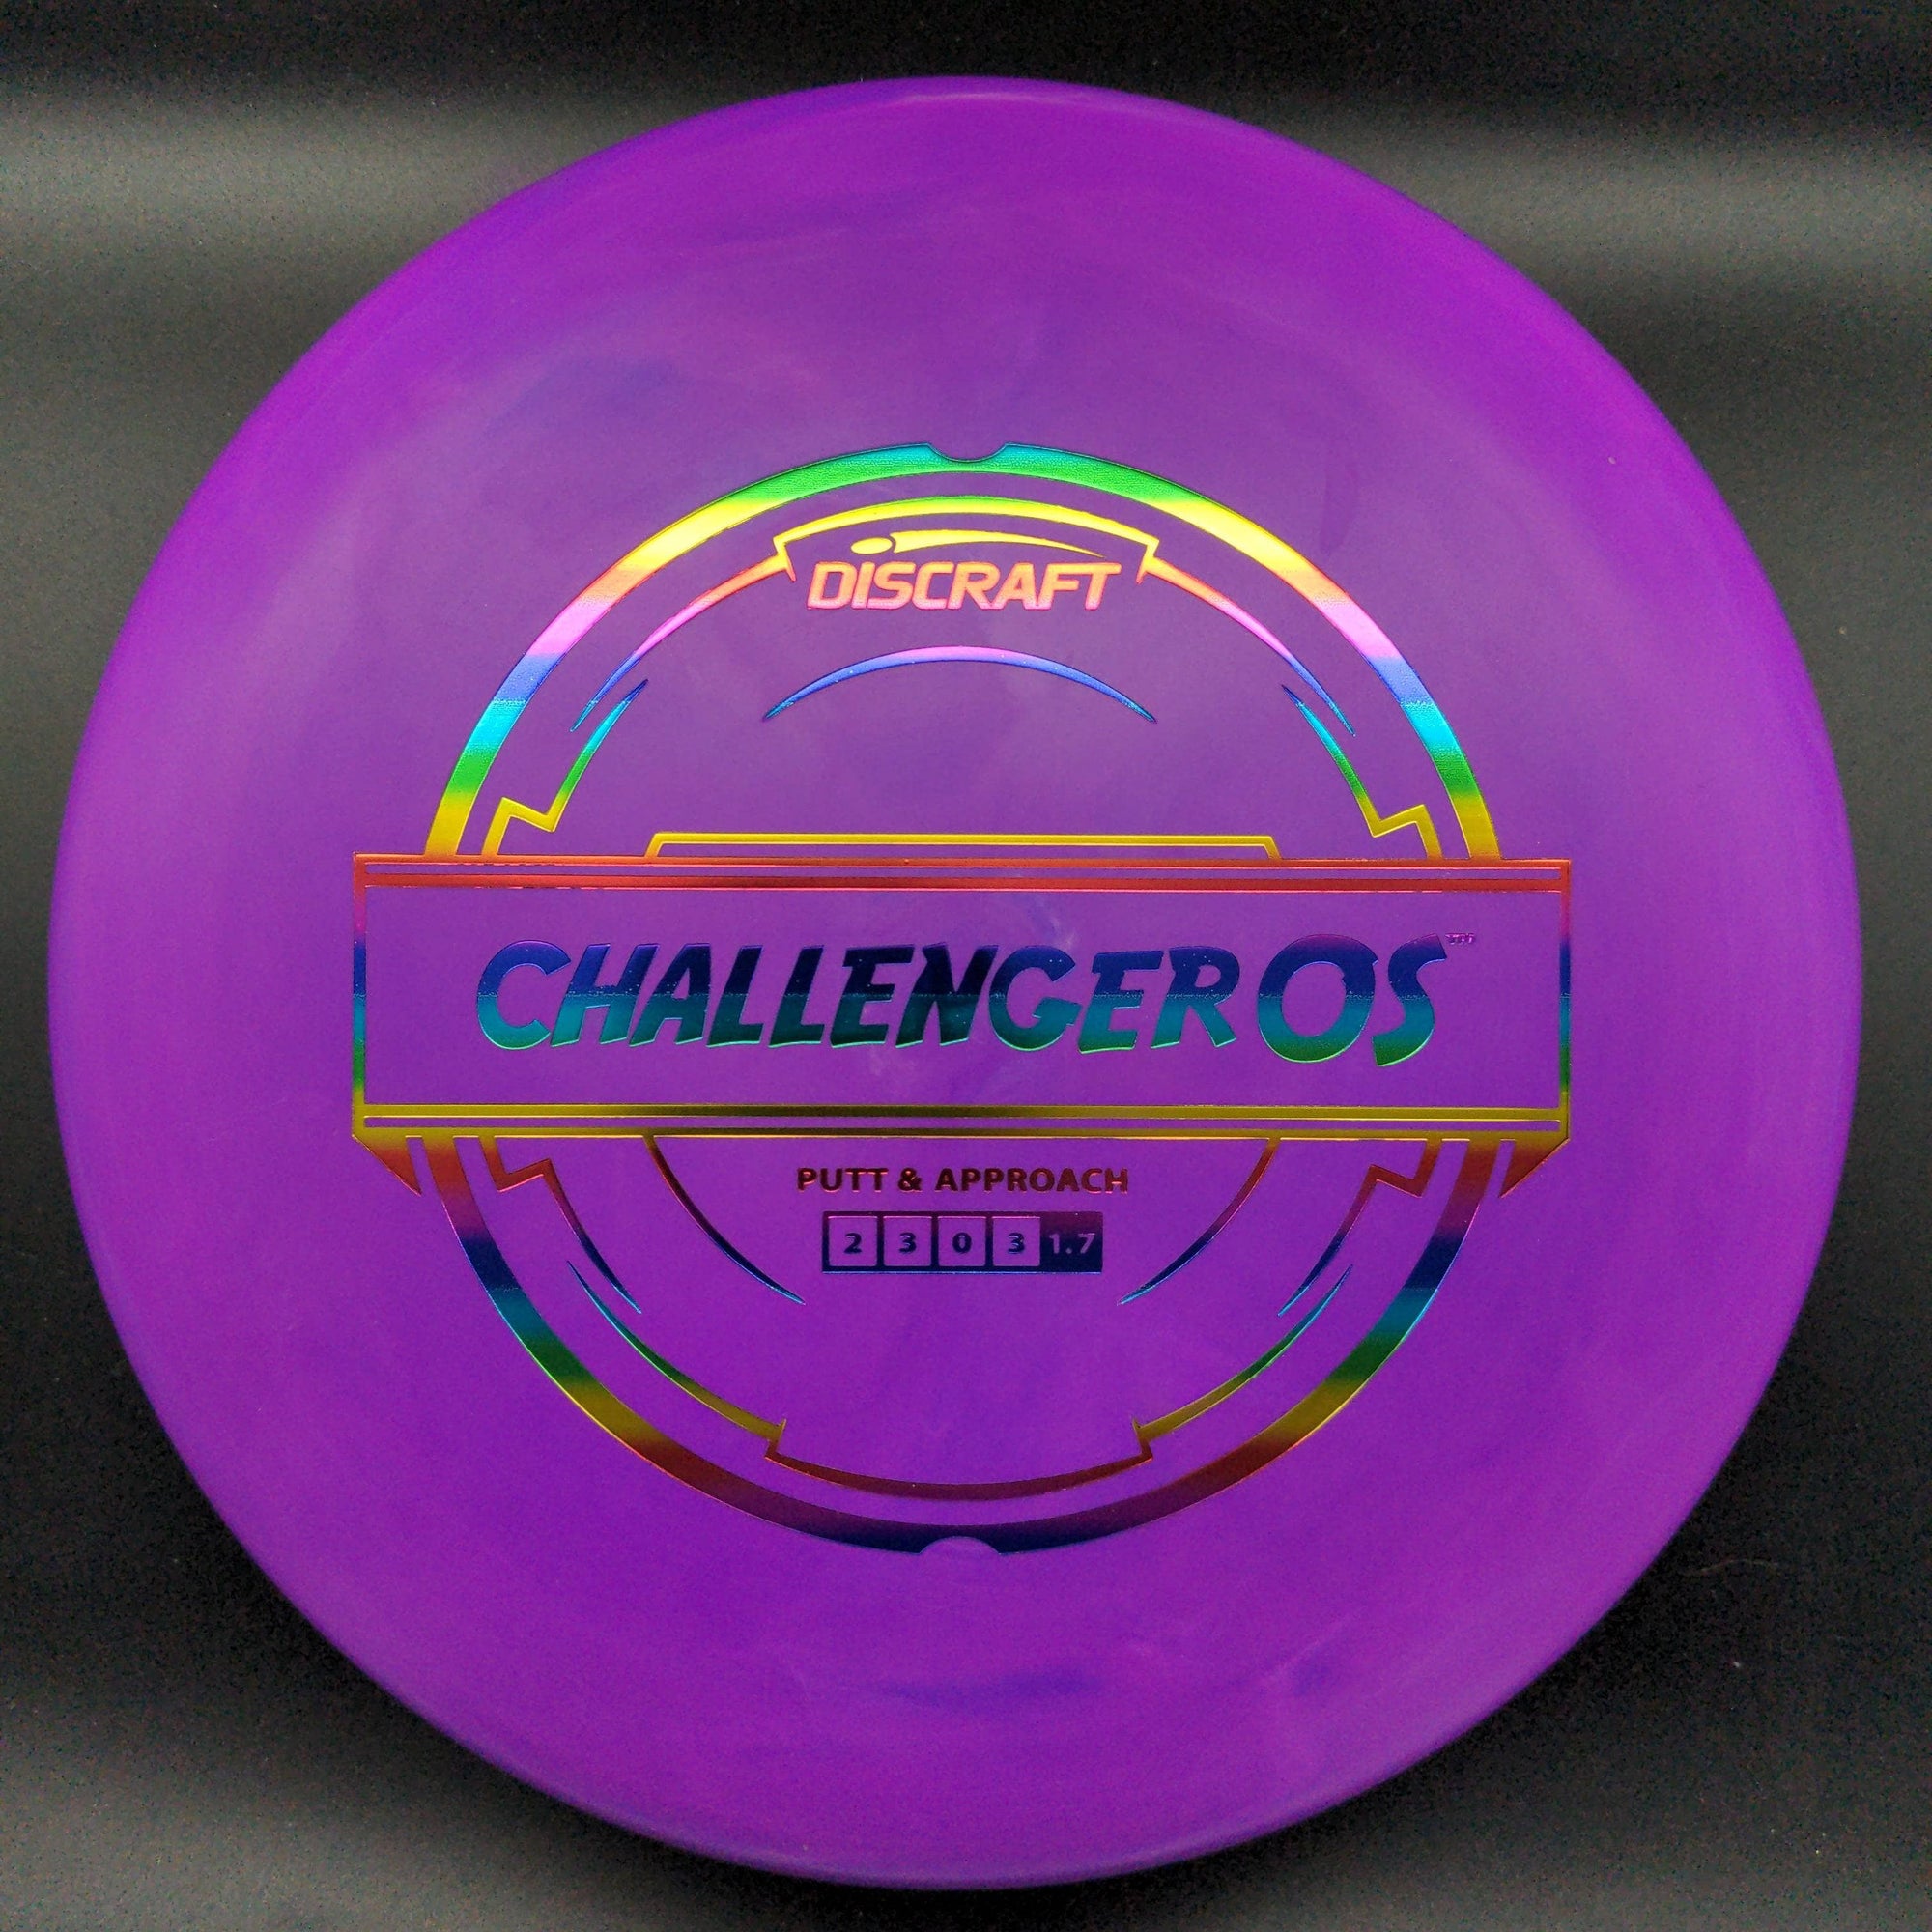 Gem Discs Challenger OS